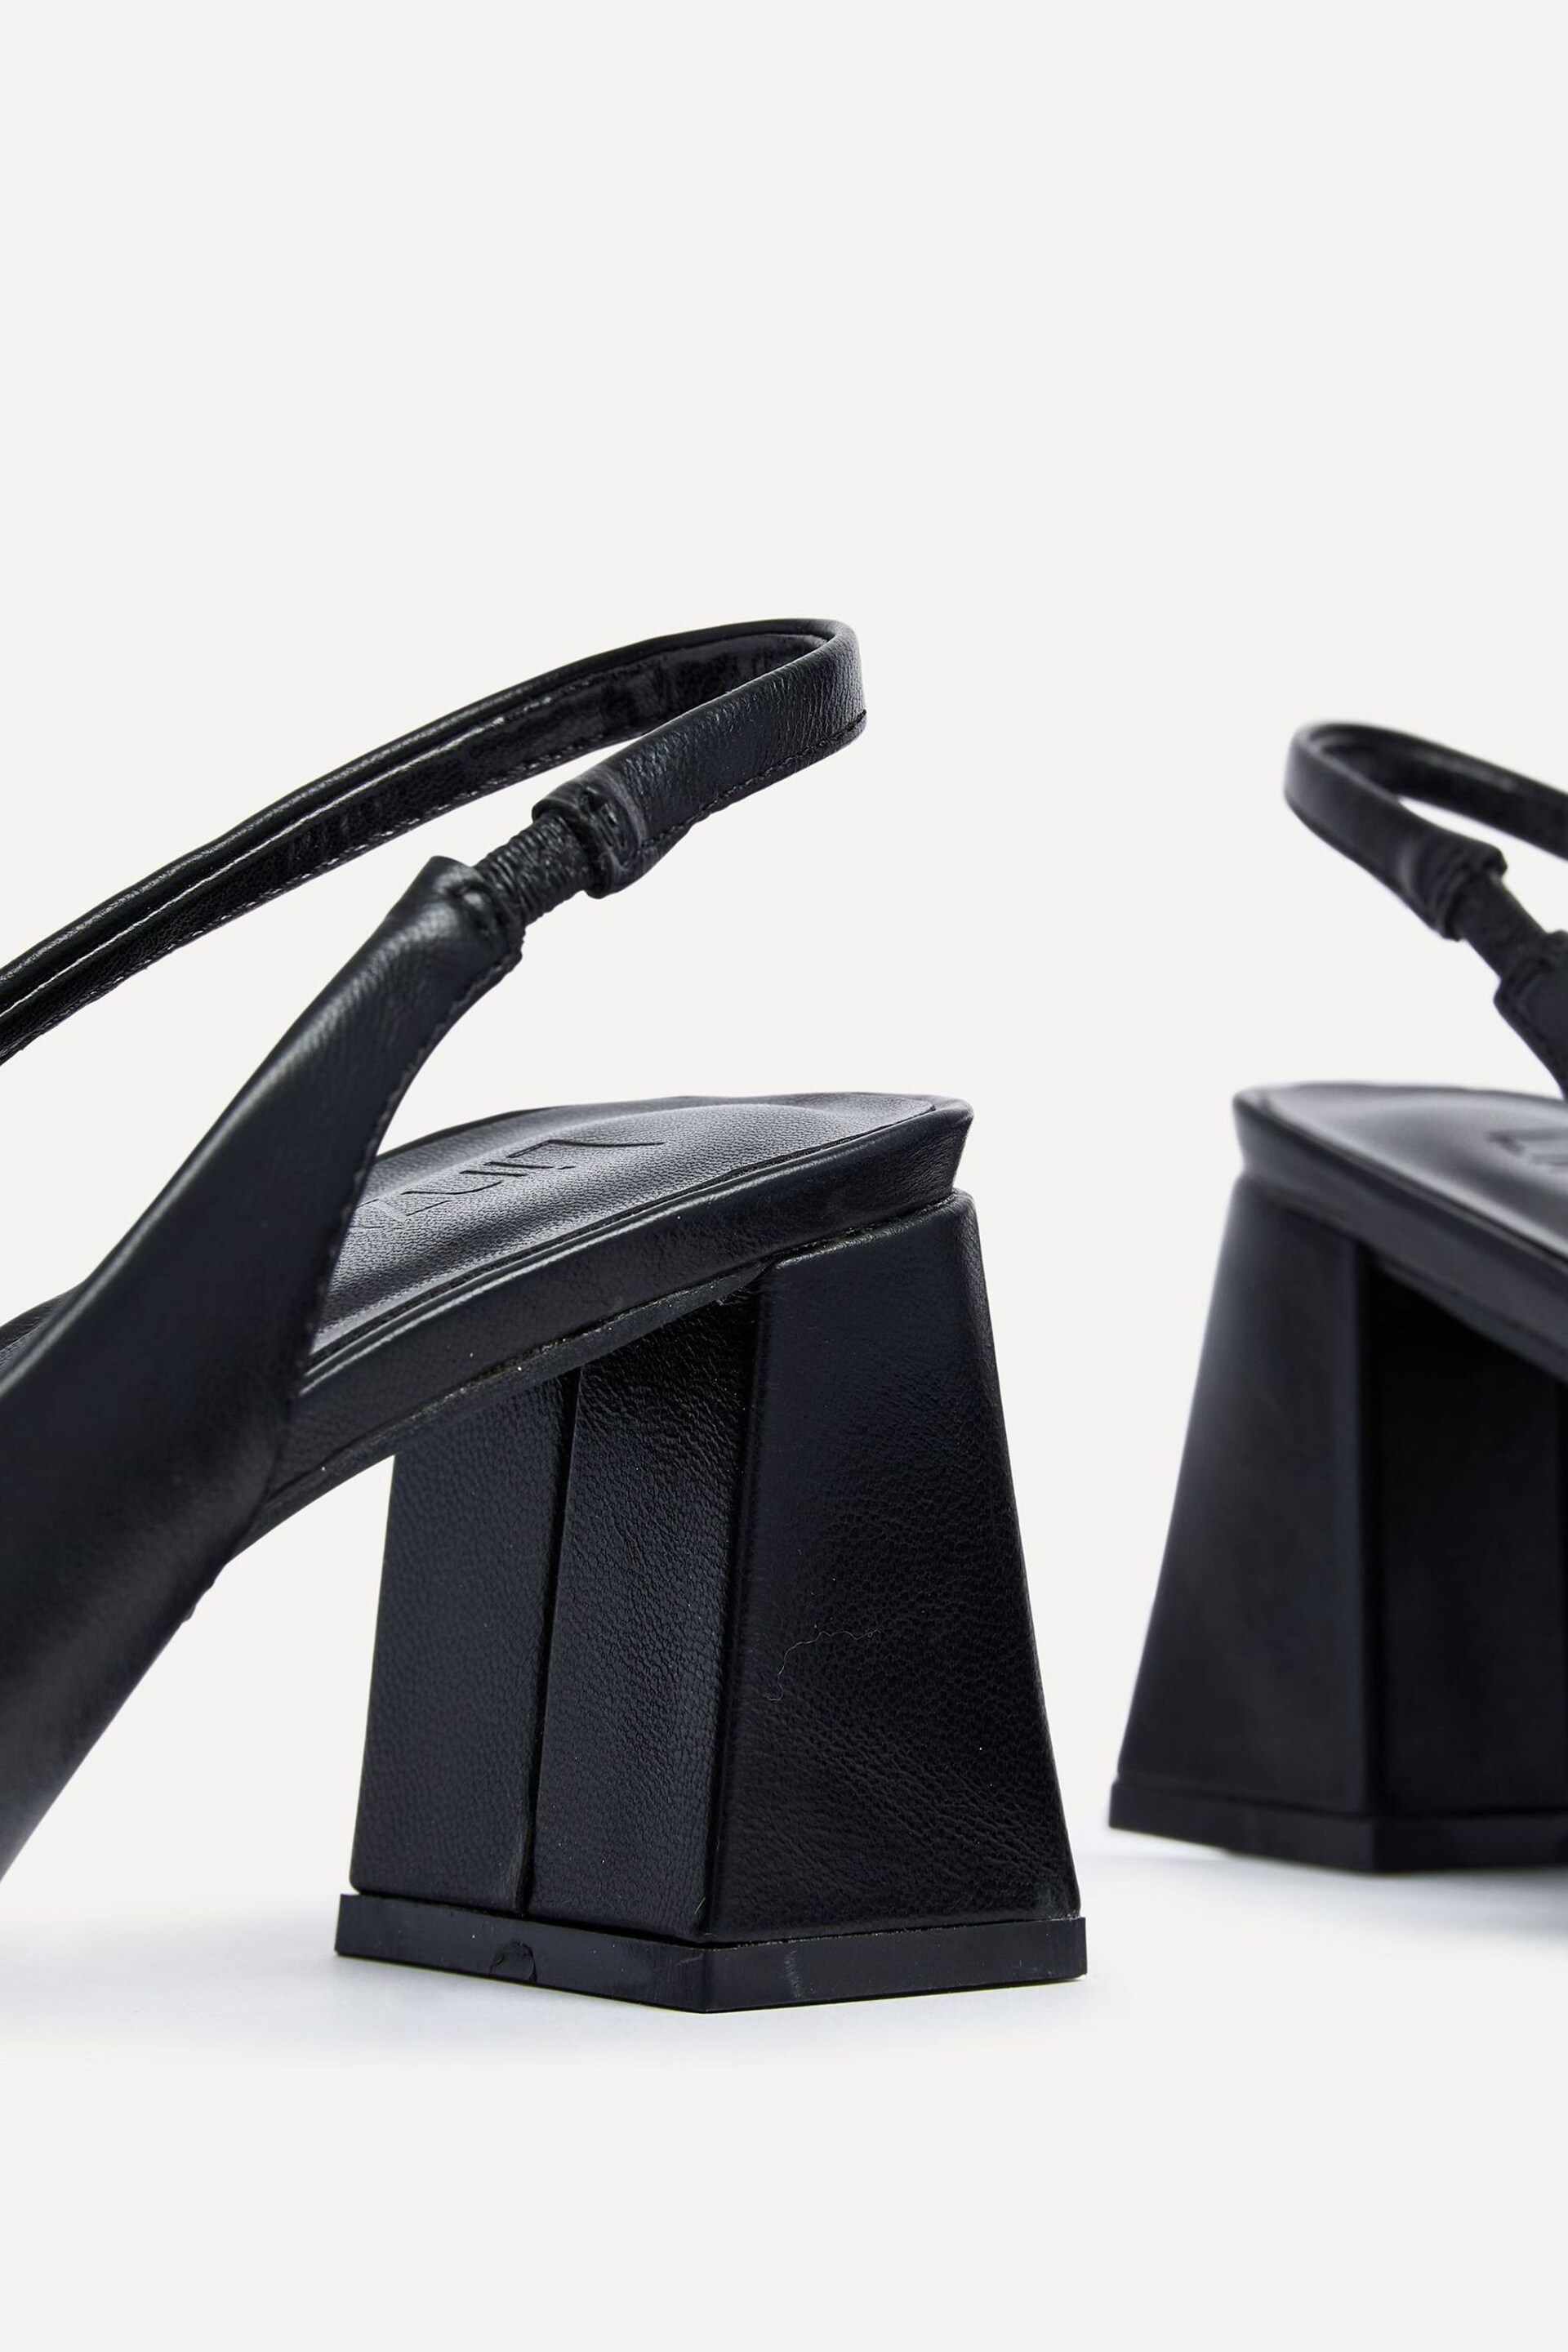 Linzi Black Elizabeth Slingback Court Shoe With Block Heels - Image 5 of 5